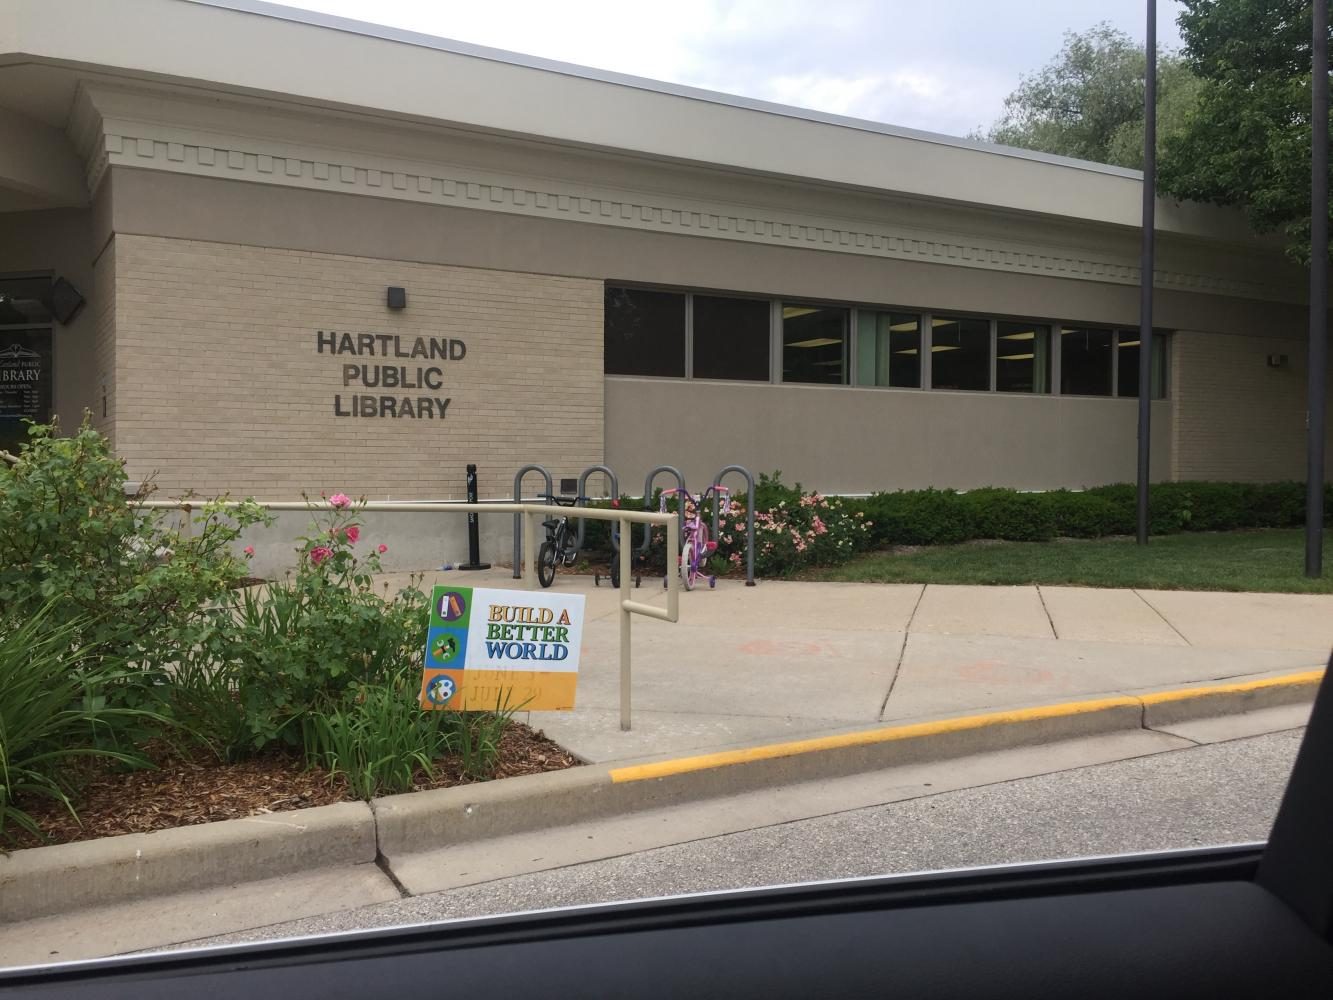 Hartland Public Library Summer Reading Program Helps Kids and Teens ‘Build A Better World’